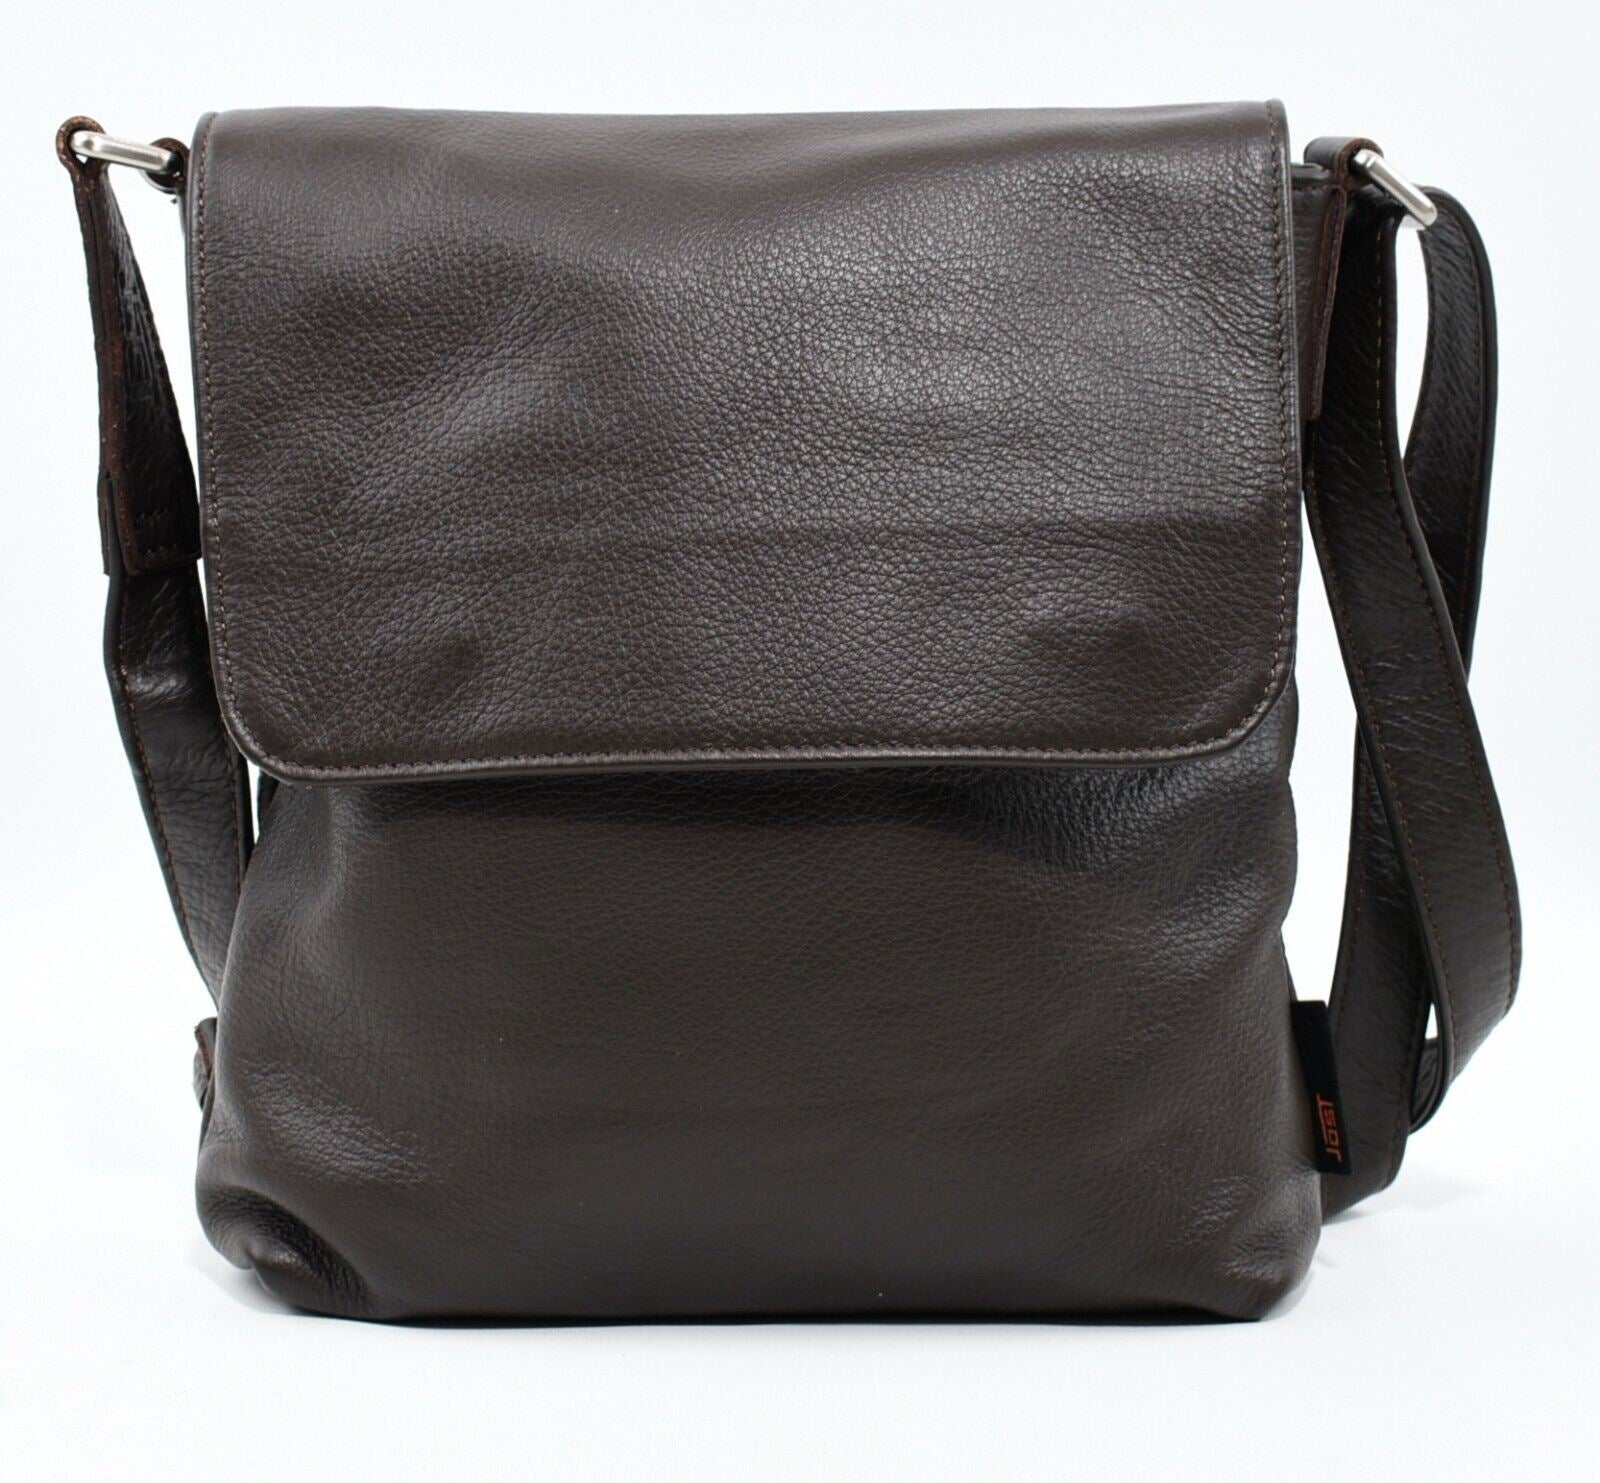 JOST Genuine Leather Shoulder Bag, Crossbody / Messenger Bag, Chocolate Brown